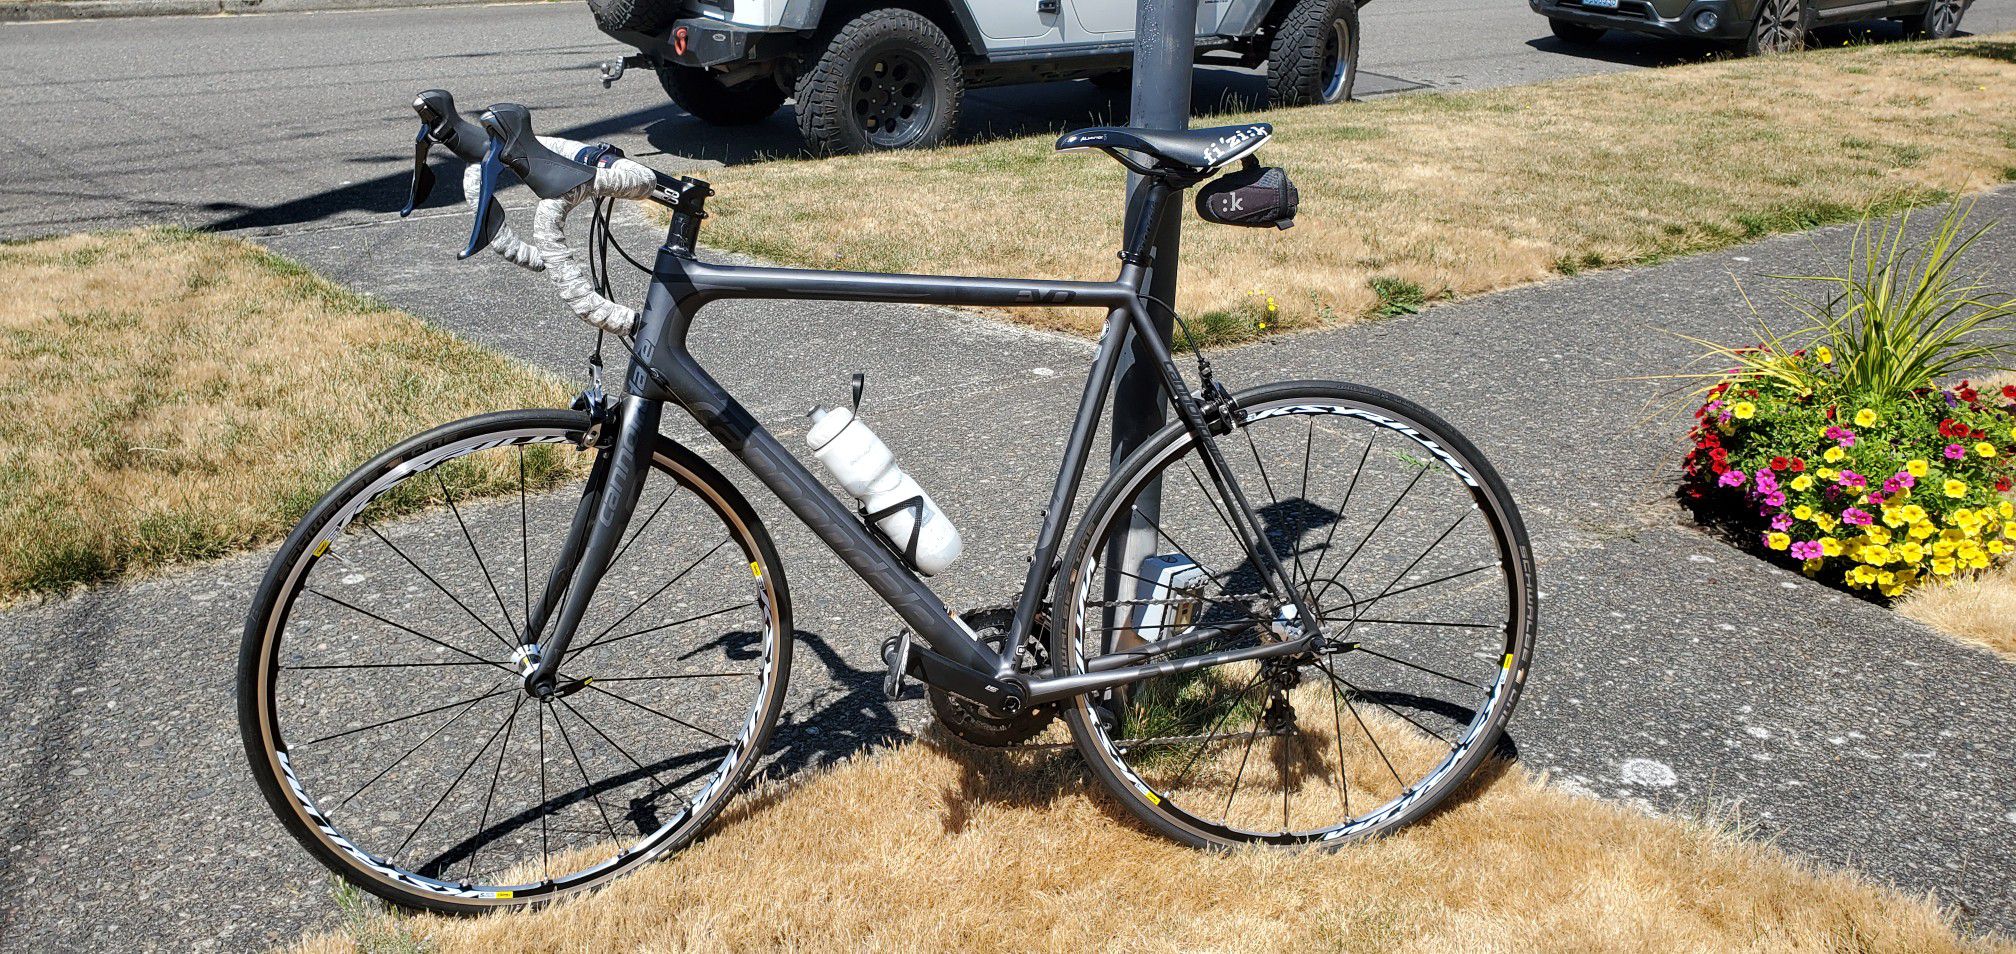 58cm road bike bicycle, Cannondale supersix evo hi mod dura ace 2